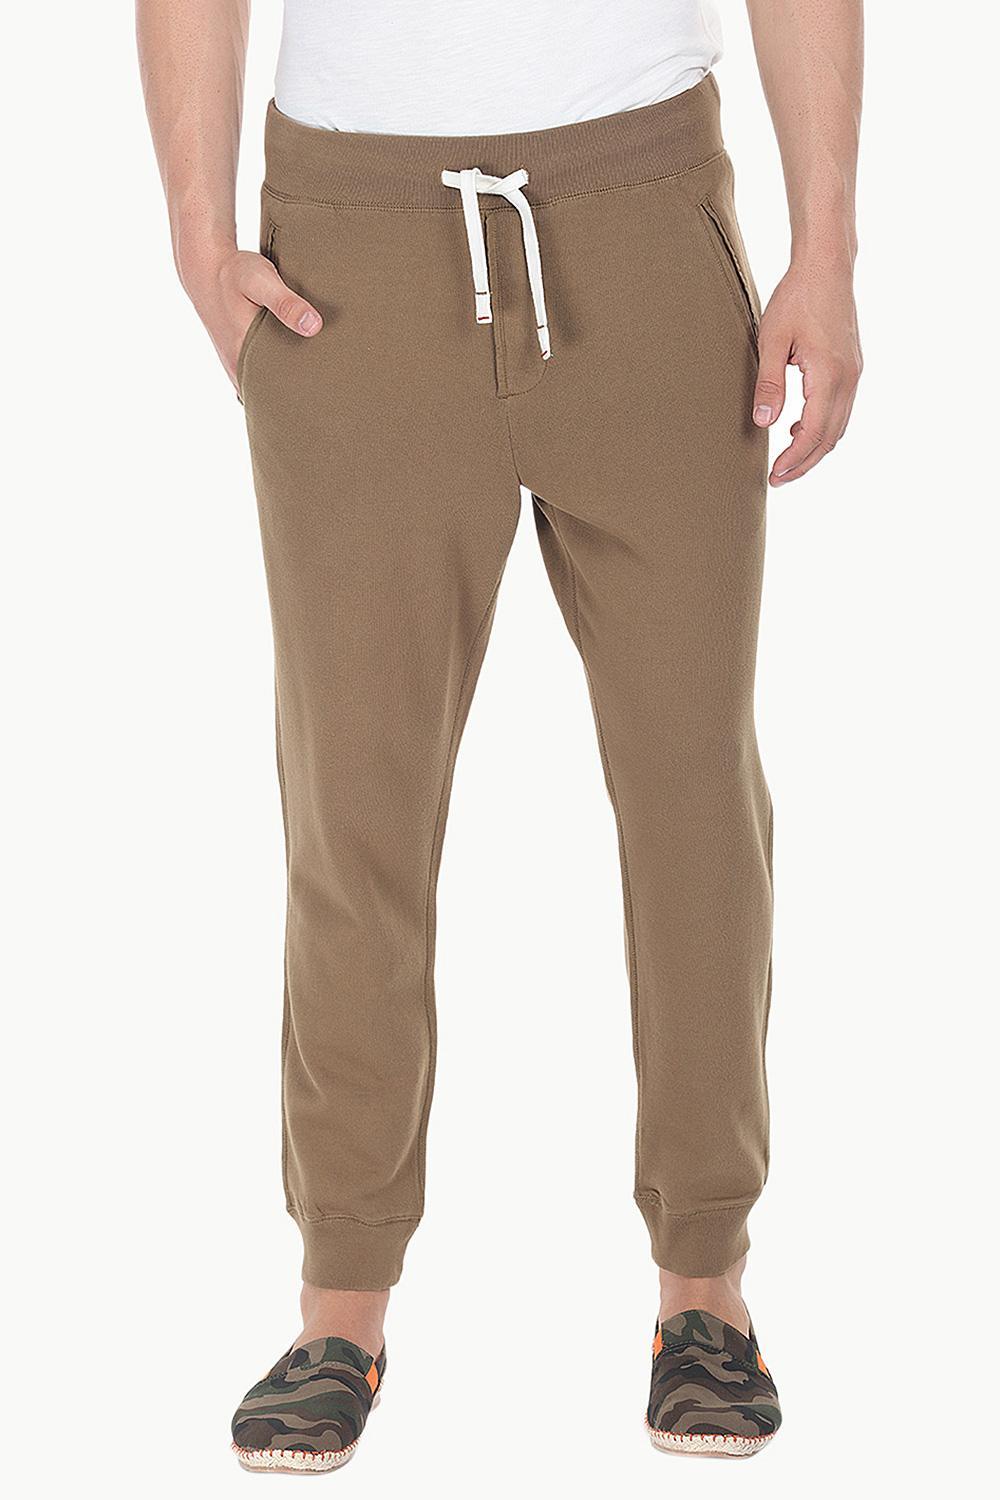 Buy Online Caramel Brown Standard Fit Cuff Jogger Sweatpants for Mens ...